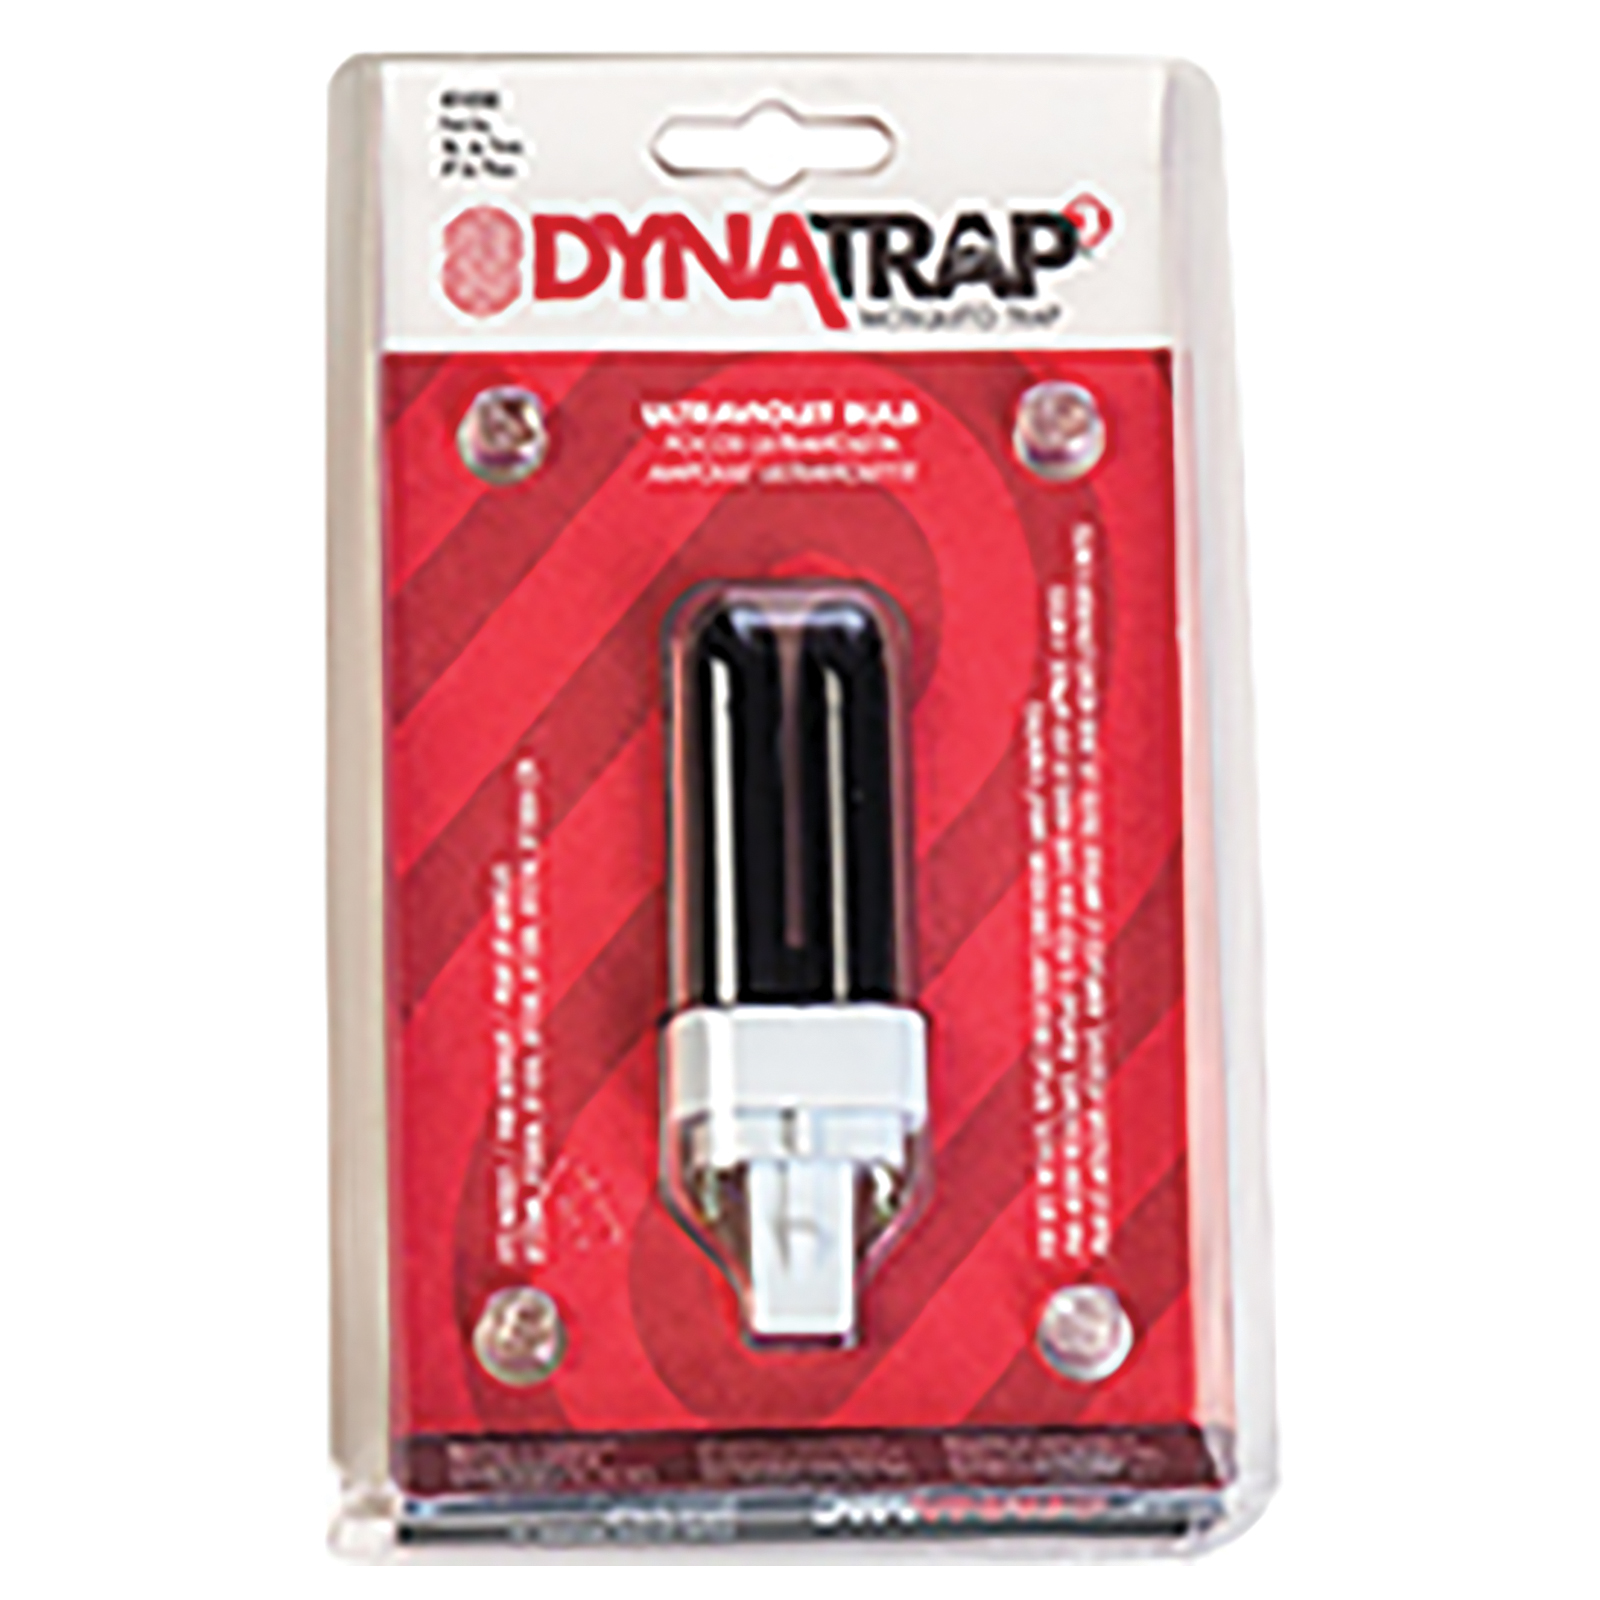 Buy DYNATRAP Decora DT1050-TUN Insect Trap, 110 VAC, Fluorescent